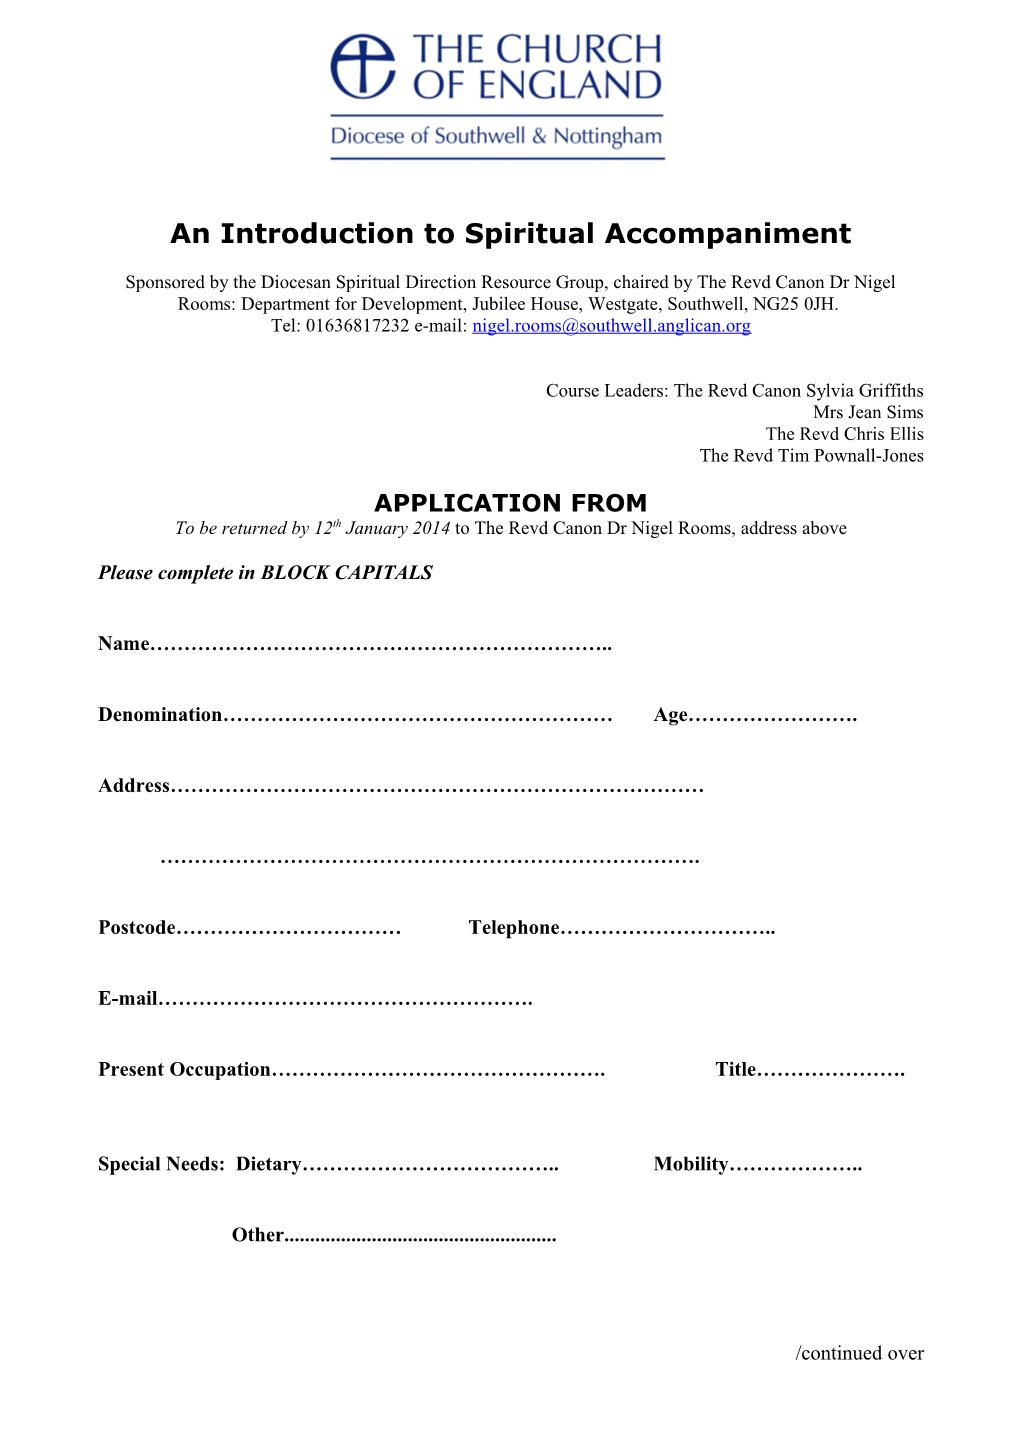 An Introduction to Spiritual Accompaniment